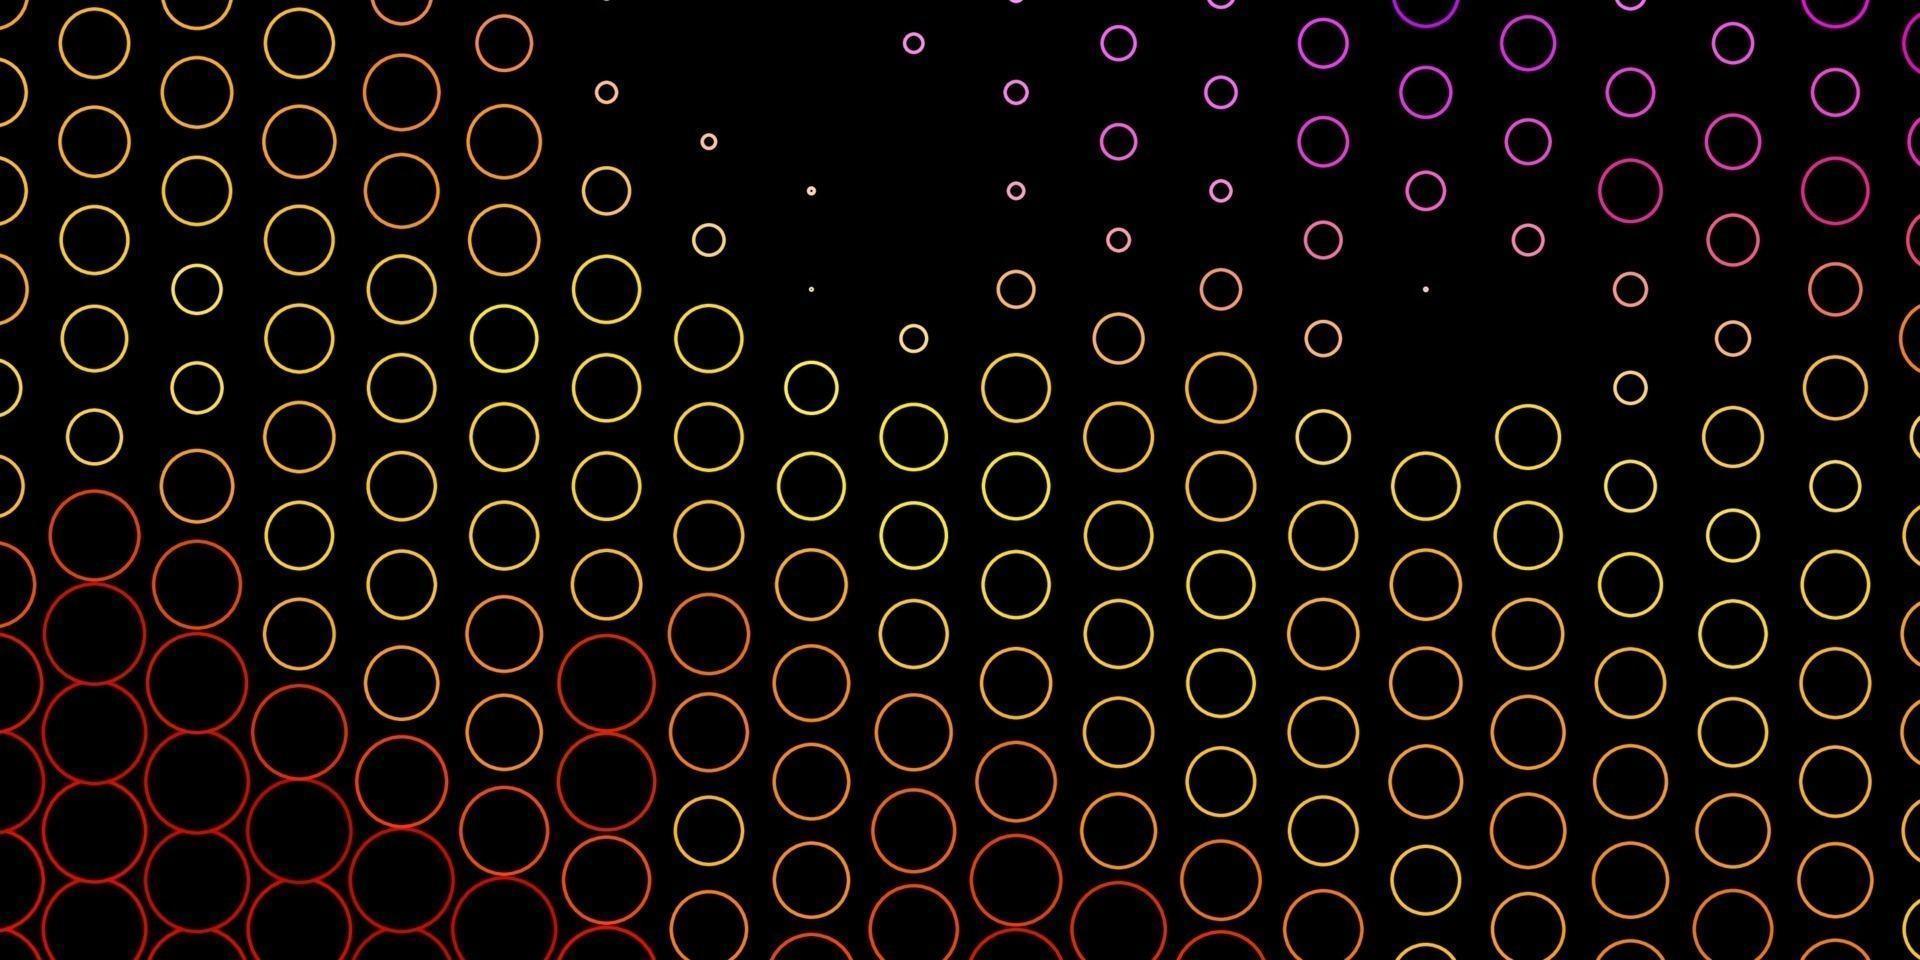 Telón de fondo de vector multicolor oscuro con puntos.